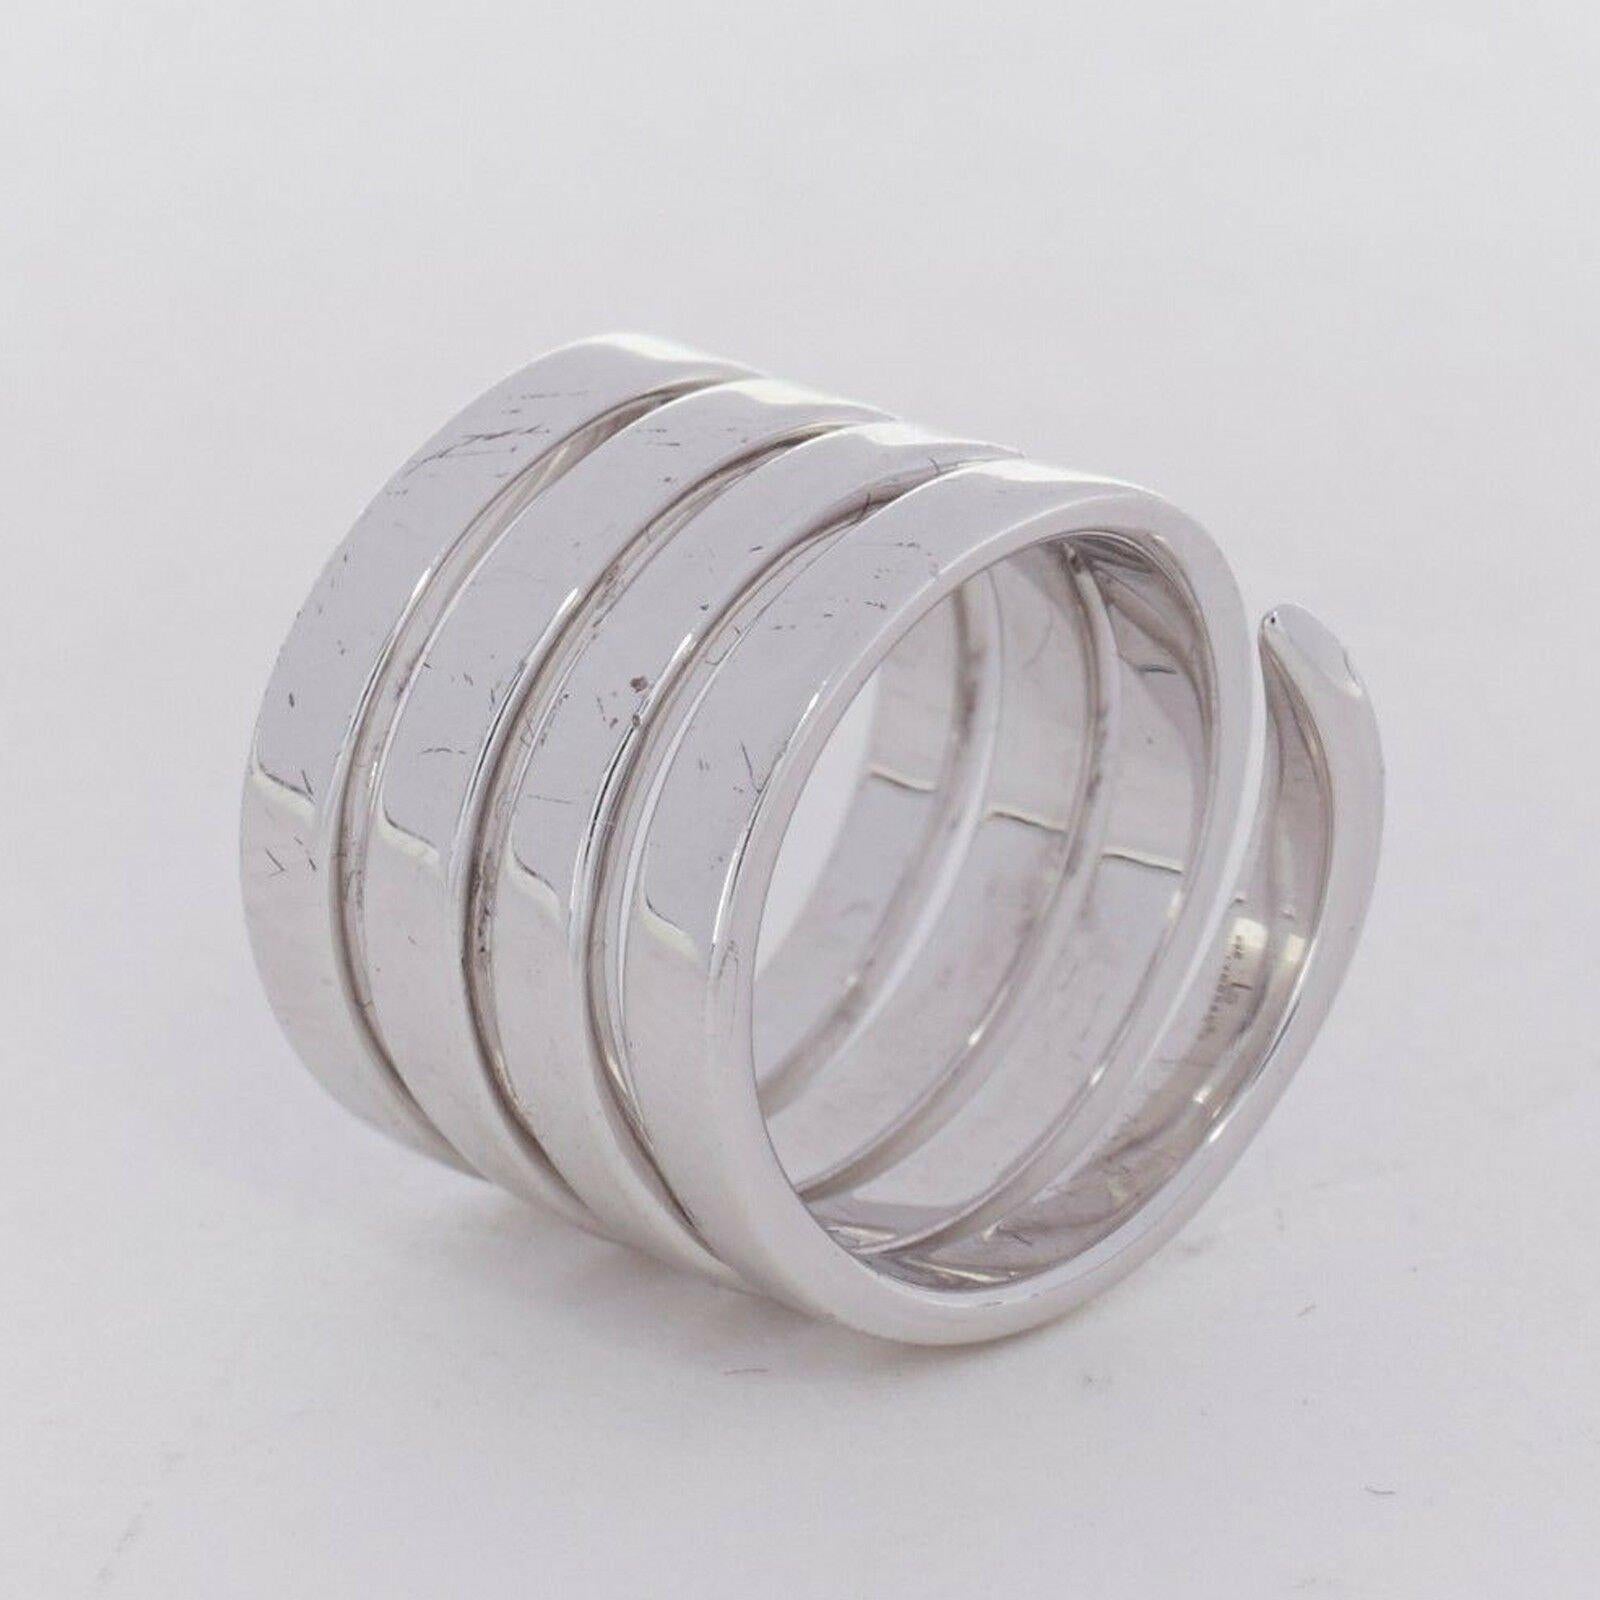 Beige LYNN BAN fine jewellery sterling silver coil tip wraparound midi ring